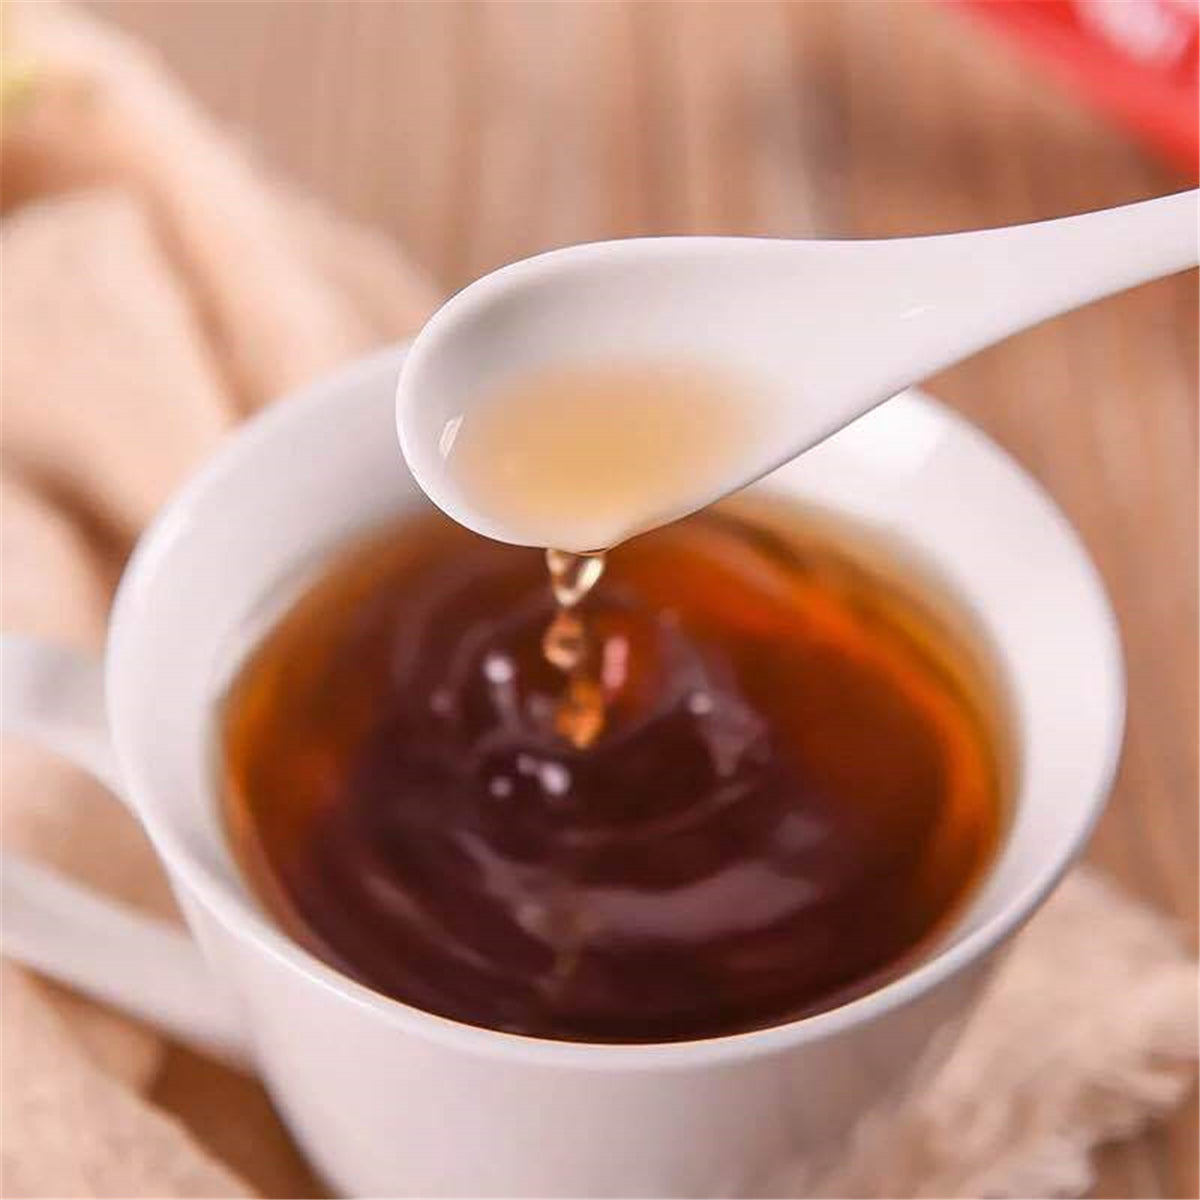 HelloYoung1-50 pcs Sweet Brown Sugar Ginger Tea Candy Instant Tea Women Health Care Nourishing Black Tea